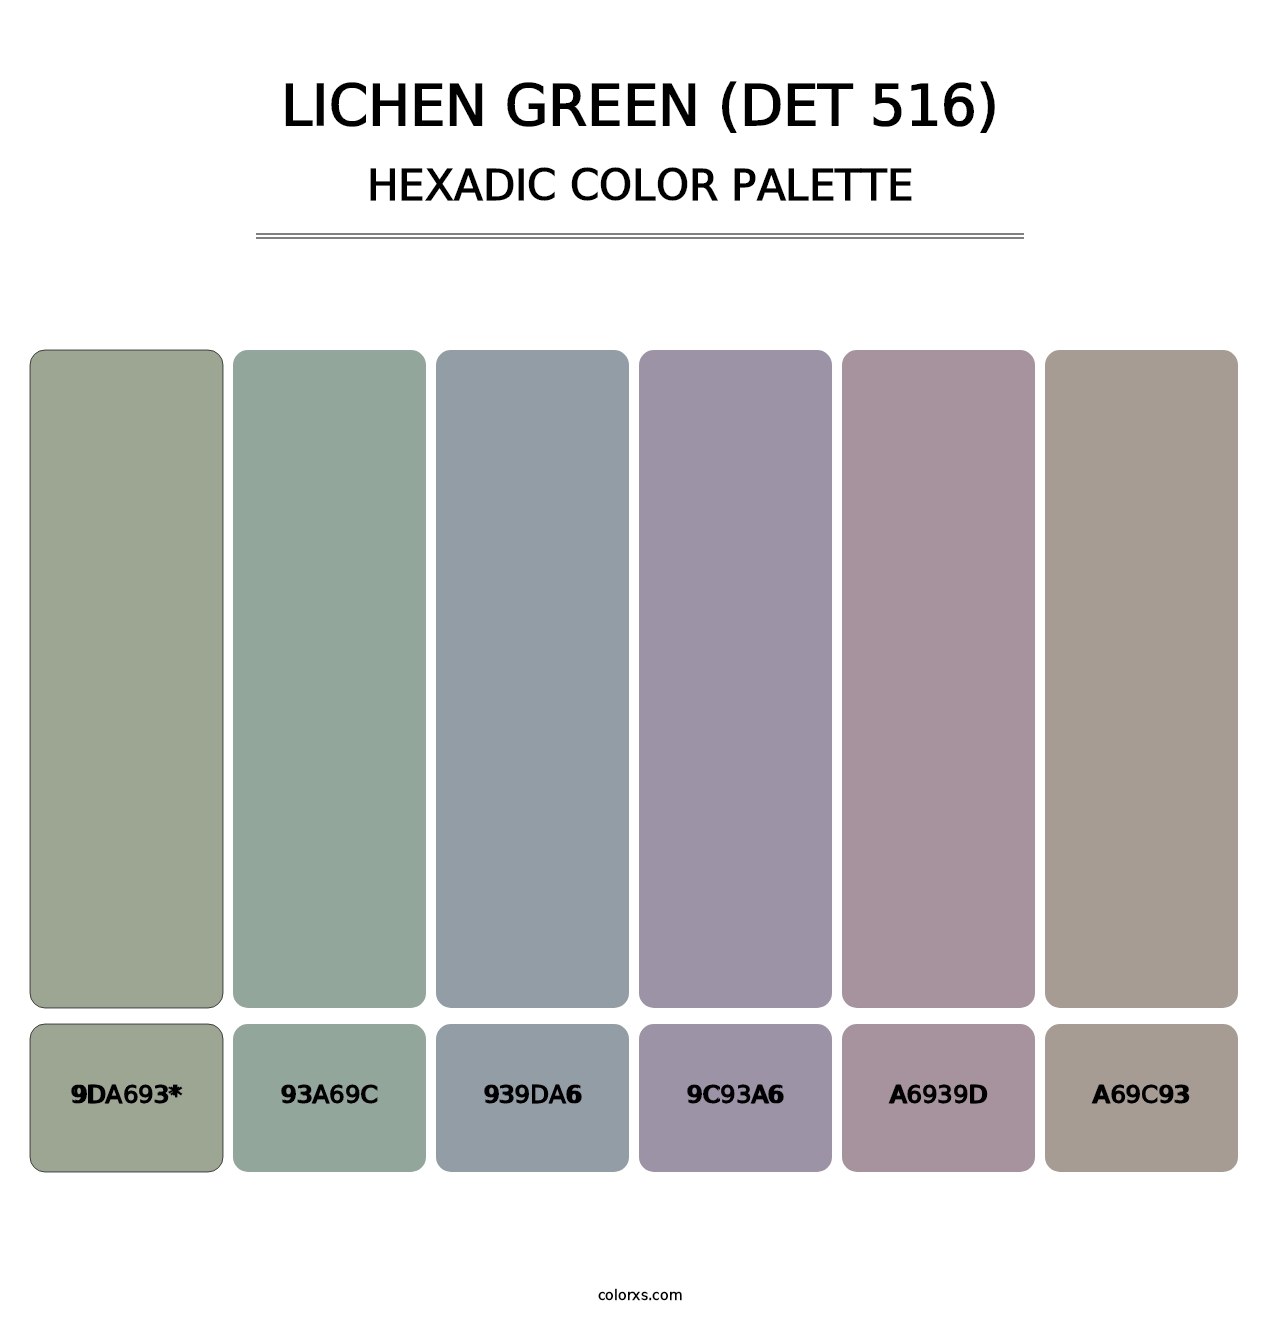 Lichen Green (DET 516) - Hexadic Color Palette